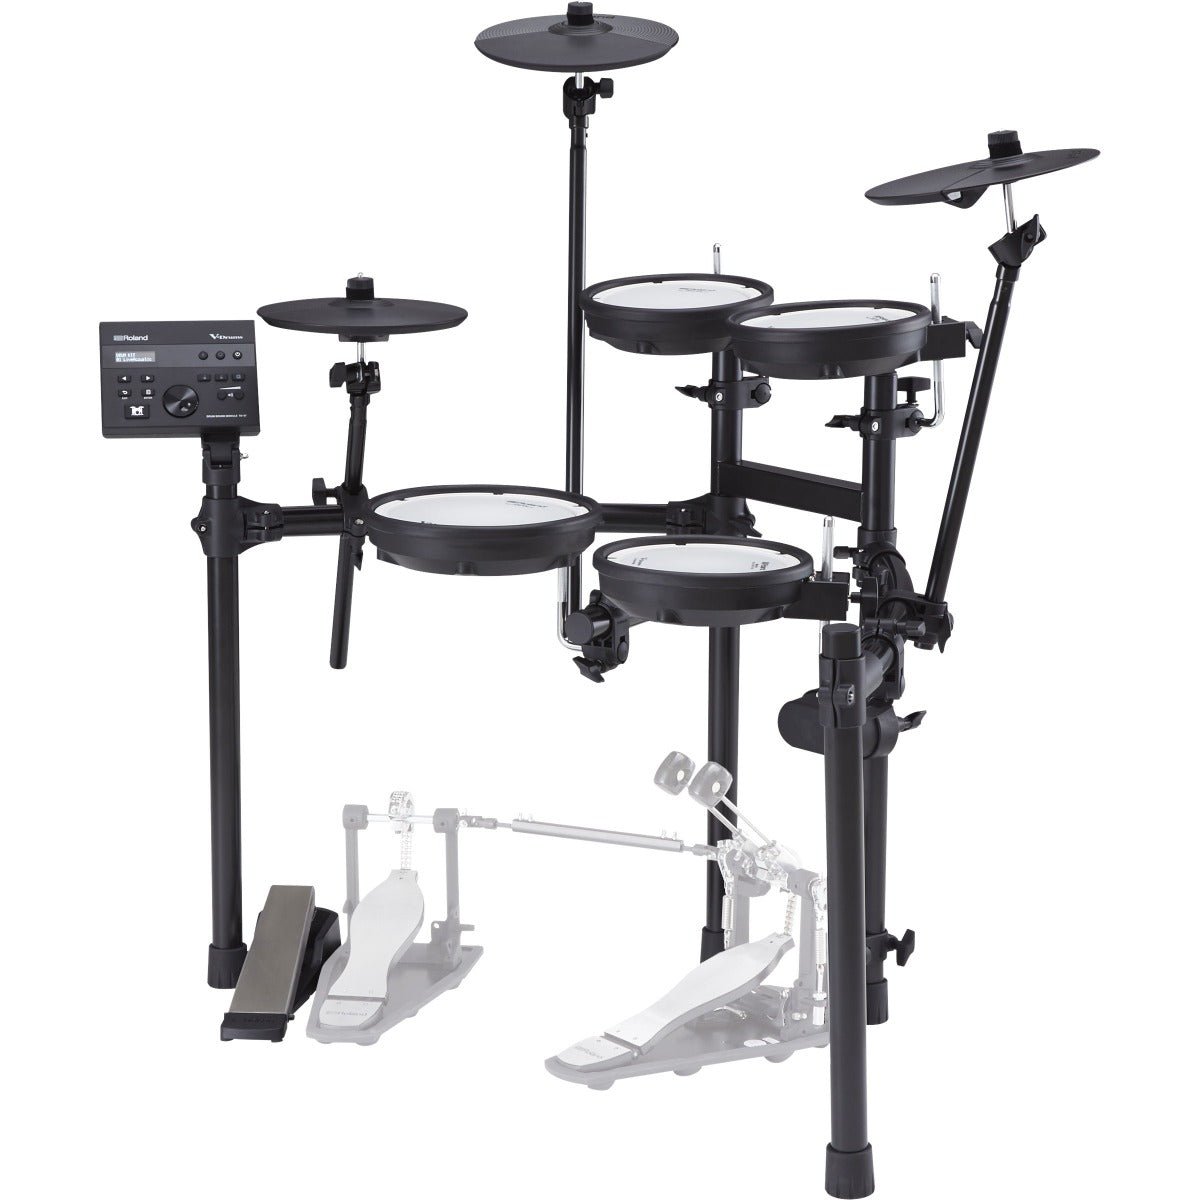 Roland TD-07DMK V-Drums Electronic Drum Set DRUM ESSENTIALS BUNDLE